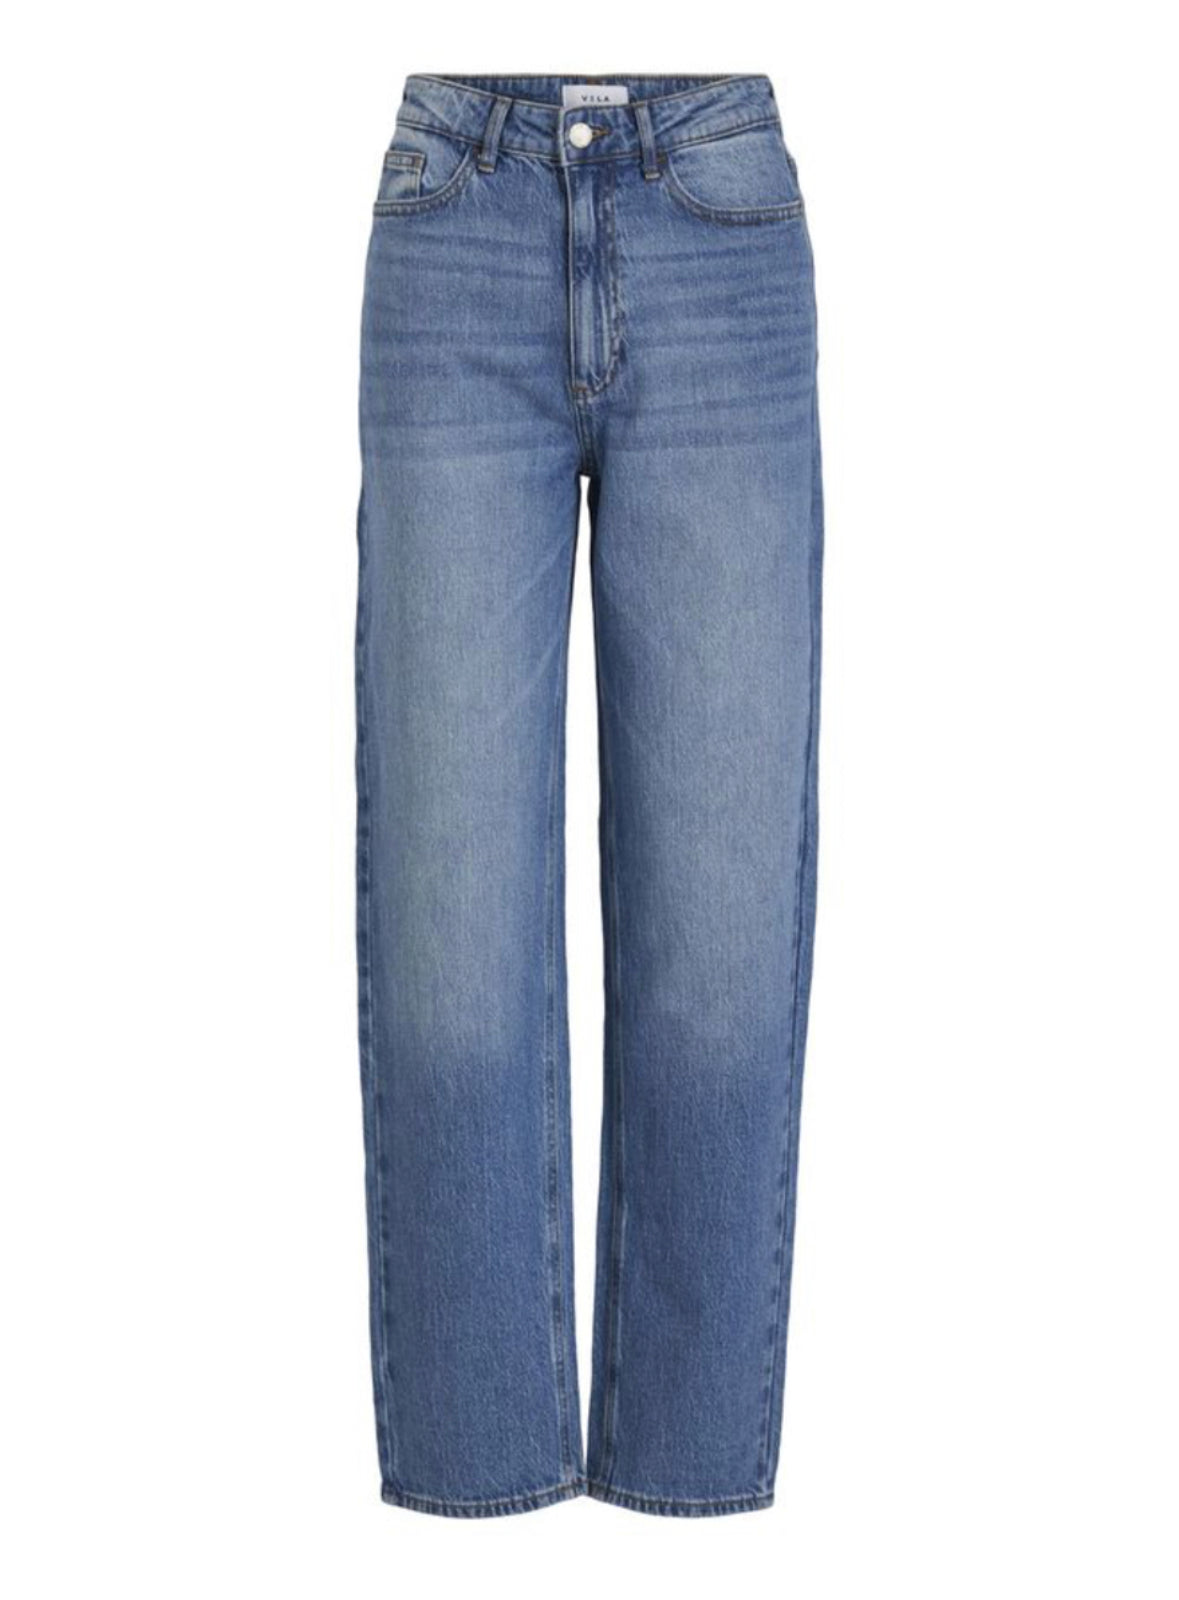 Vikelly medium blue straight denim jeans